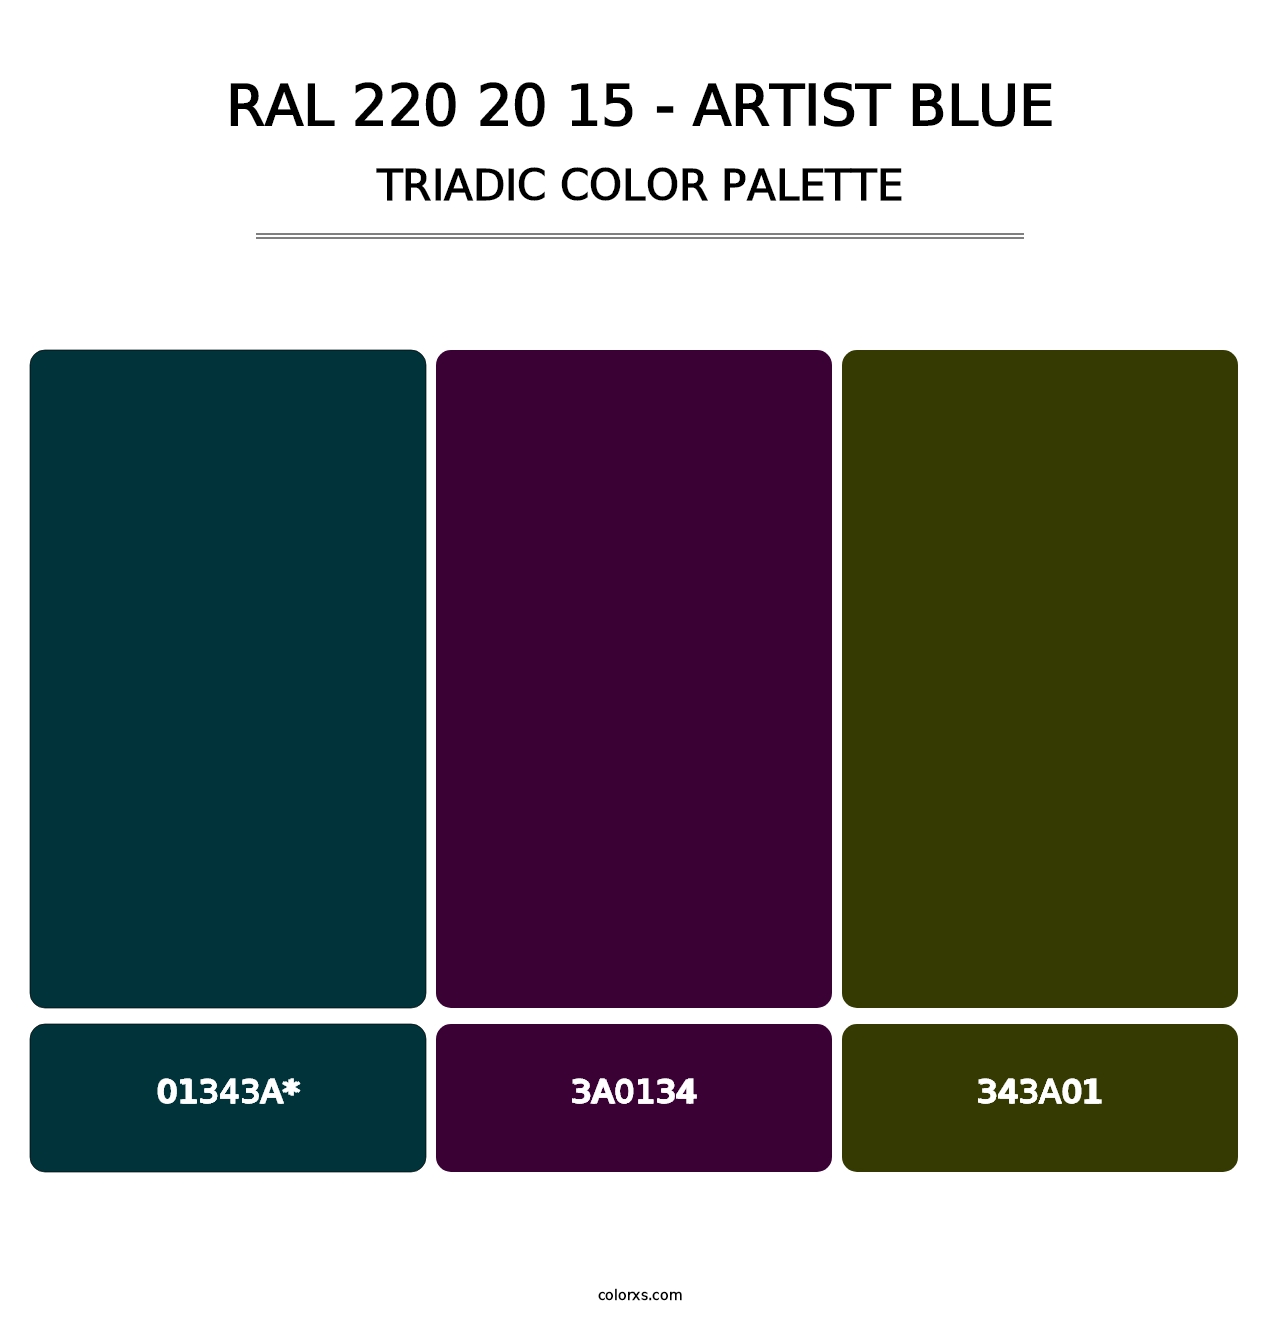 RAL 220 20 15 - Artist Blue - Triadic Color Palette